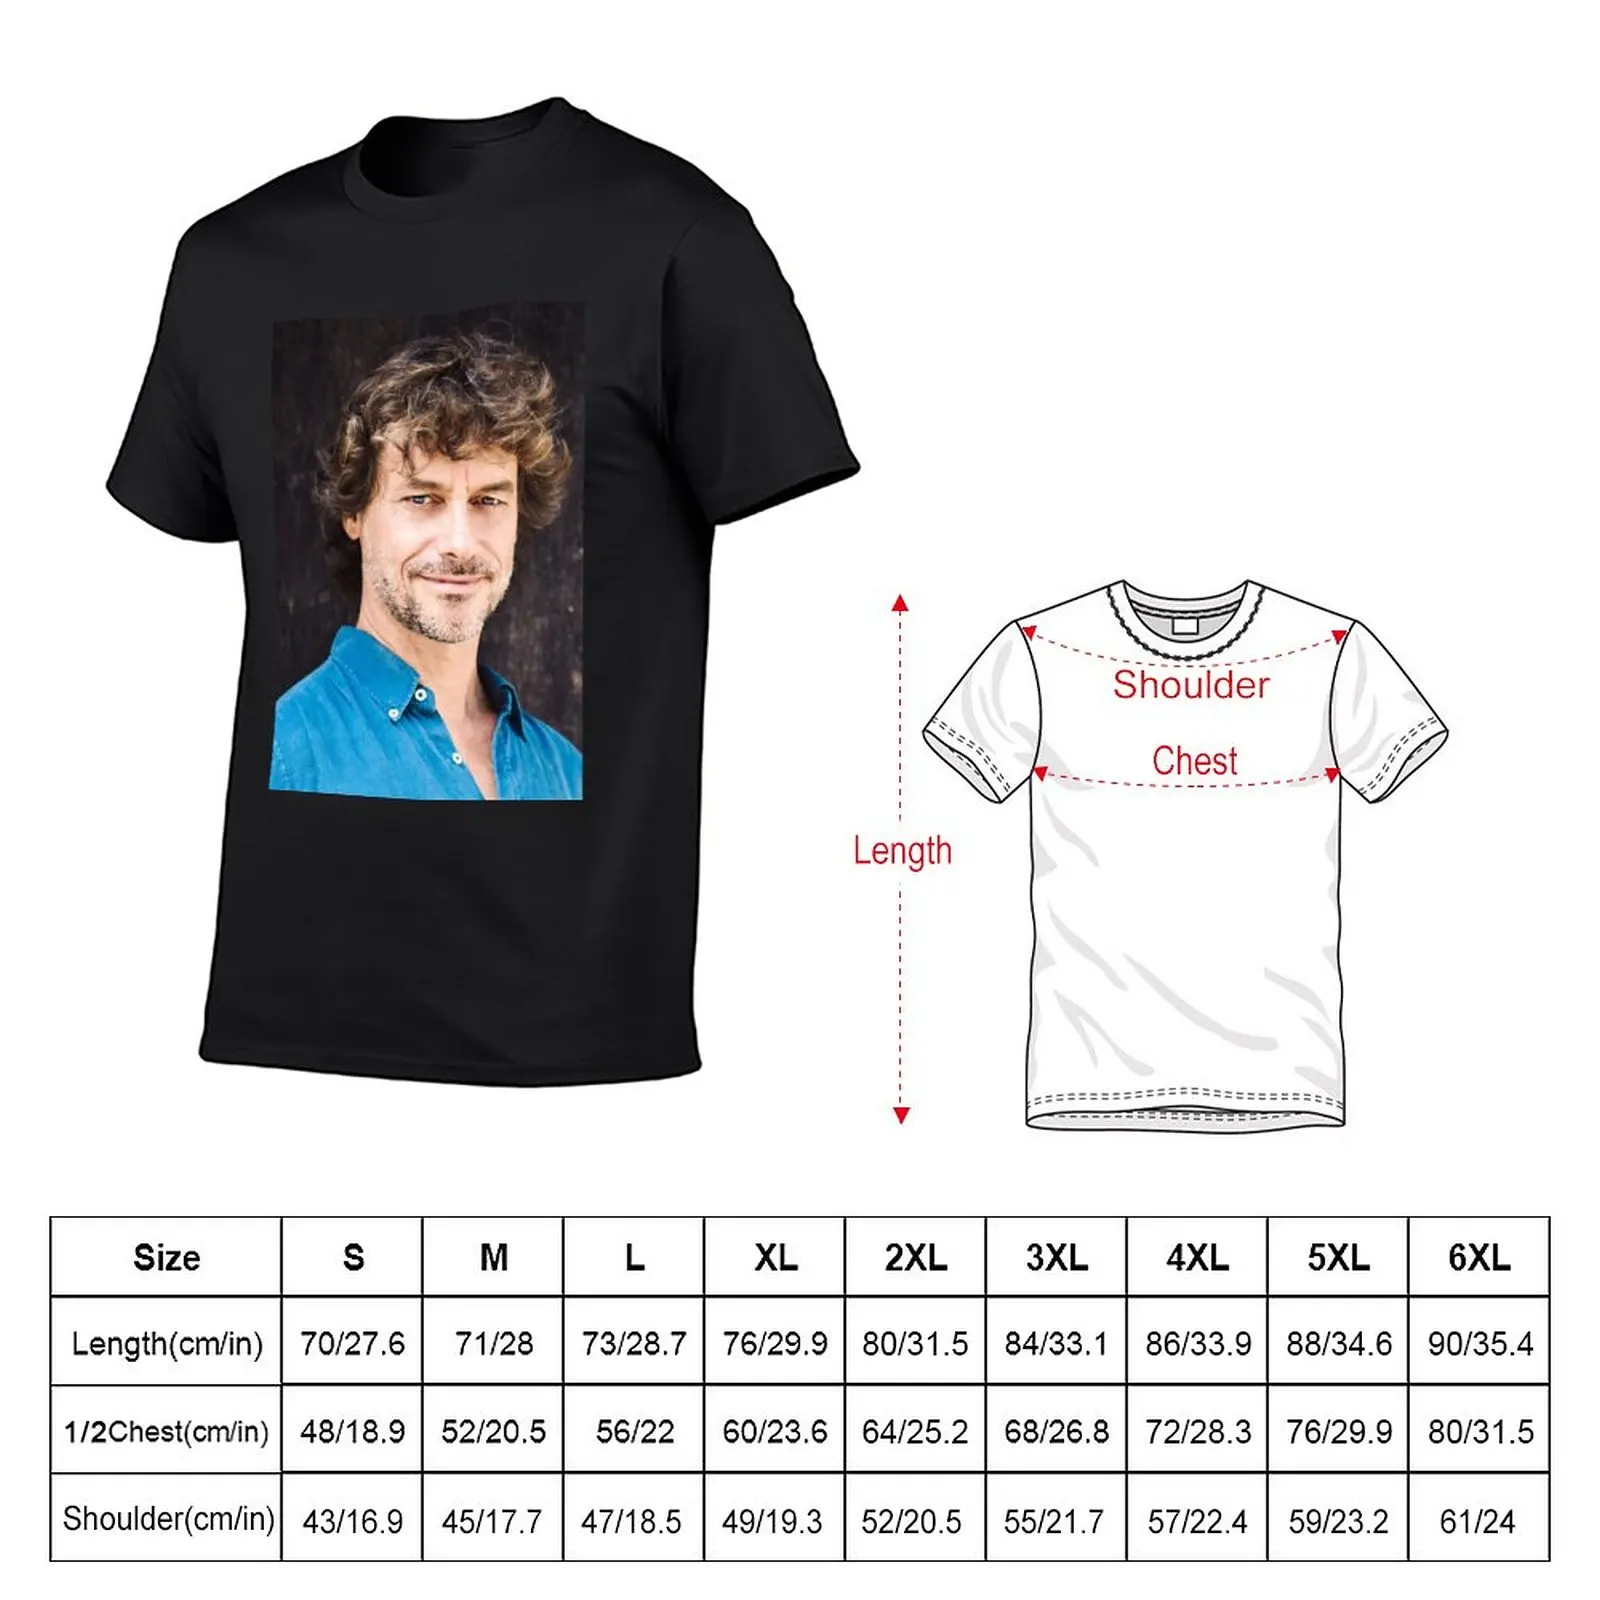 New Alberto Angela - divulgo forte! T-Shirt shirts graphic tees graphics t shirt plus size tops mens big and tall t shirts